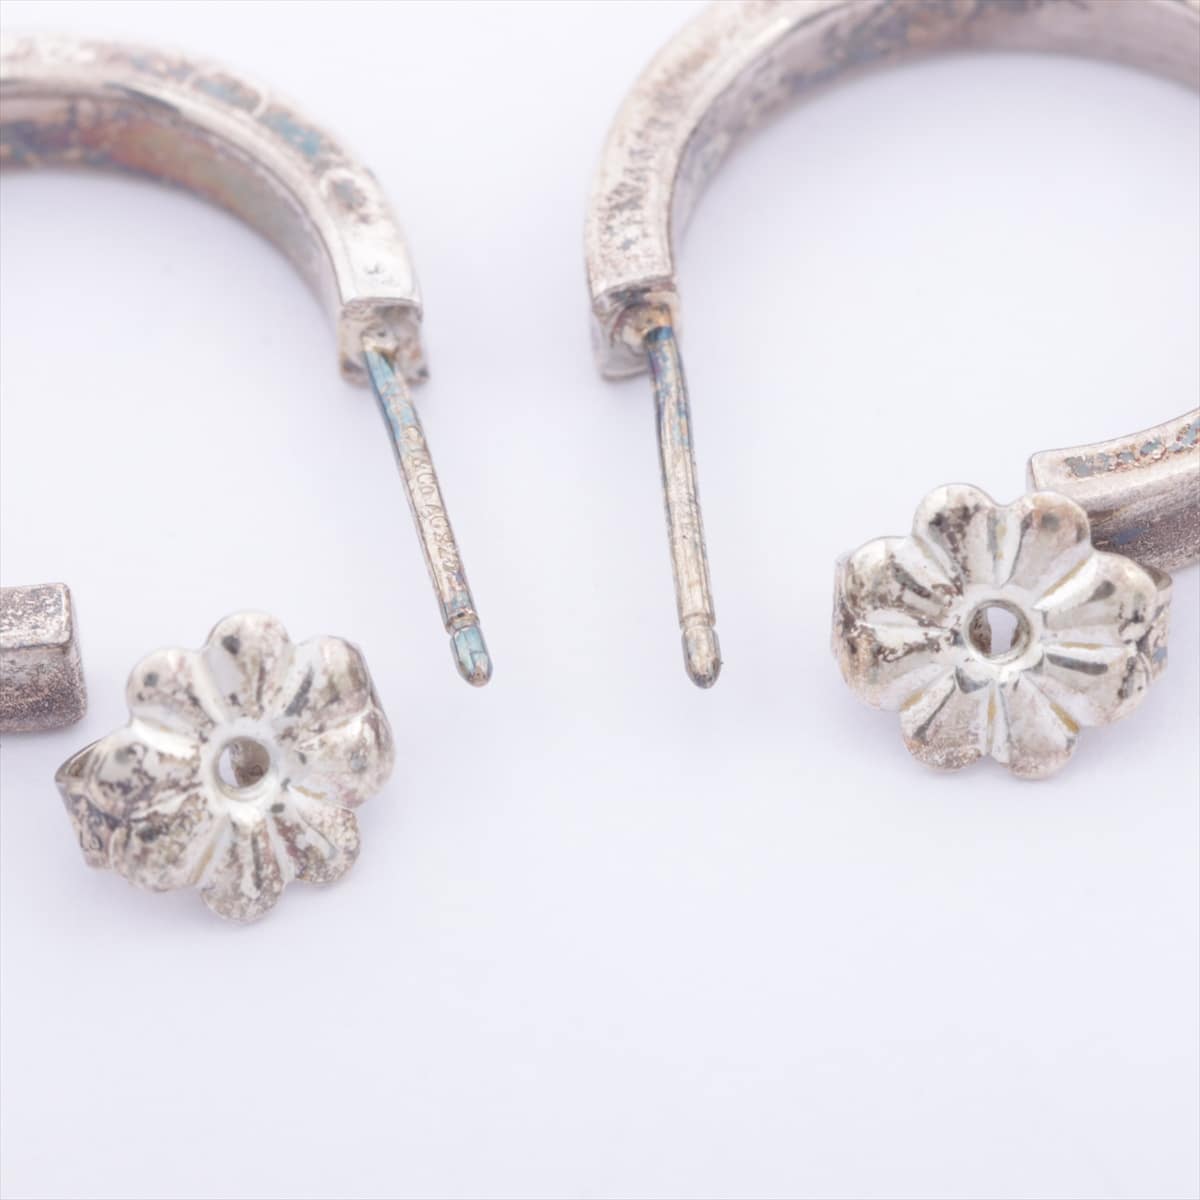 Tiffany 1837 Narrow Piercing jewelry (for both ears) 925 Silver